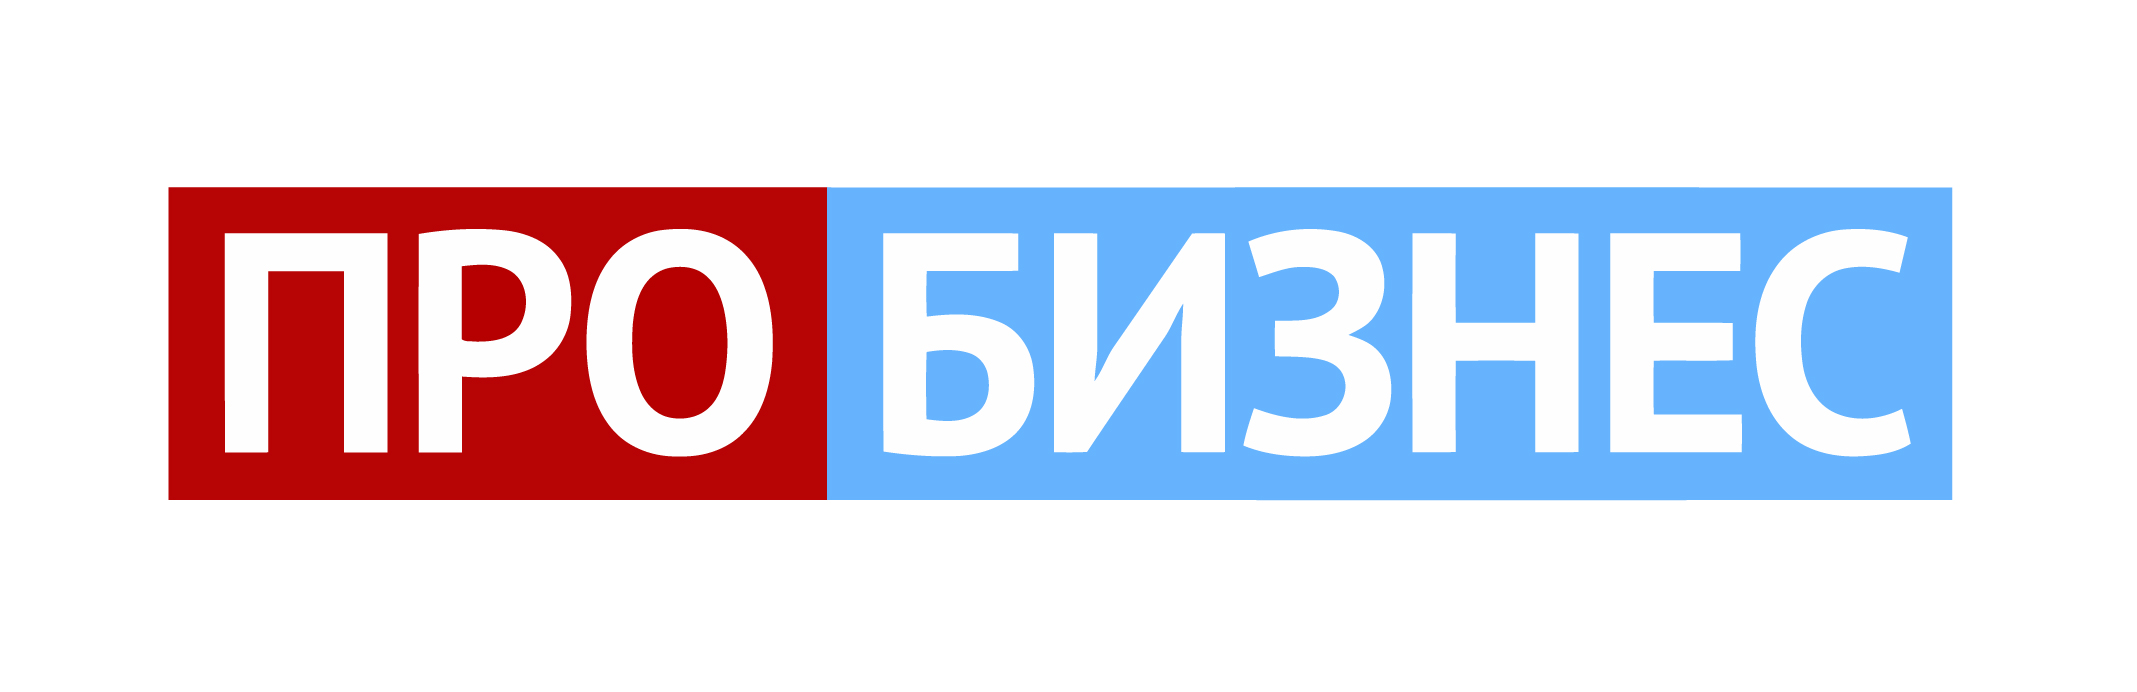 PRObusiness logo 002 CMYK1 01